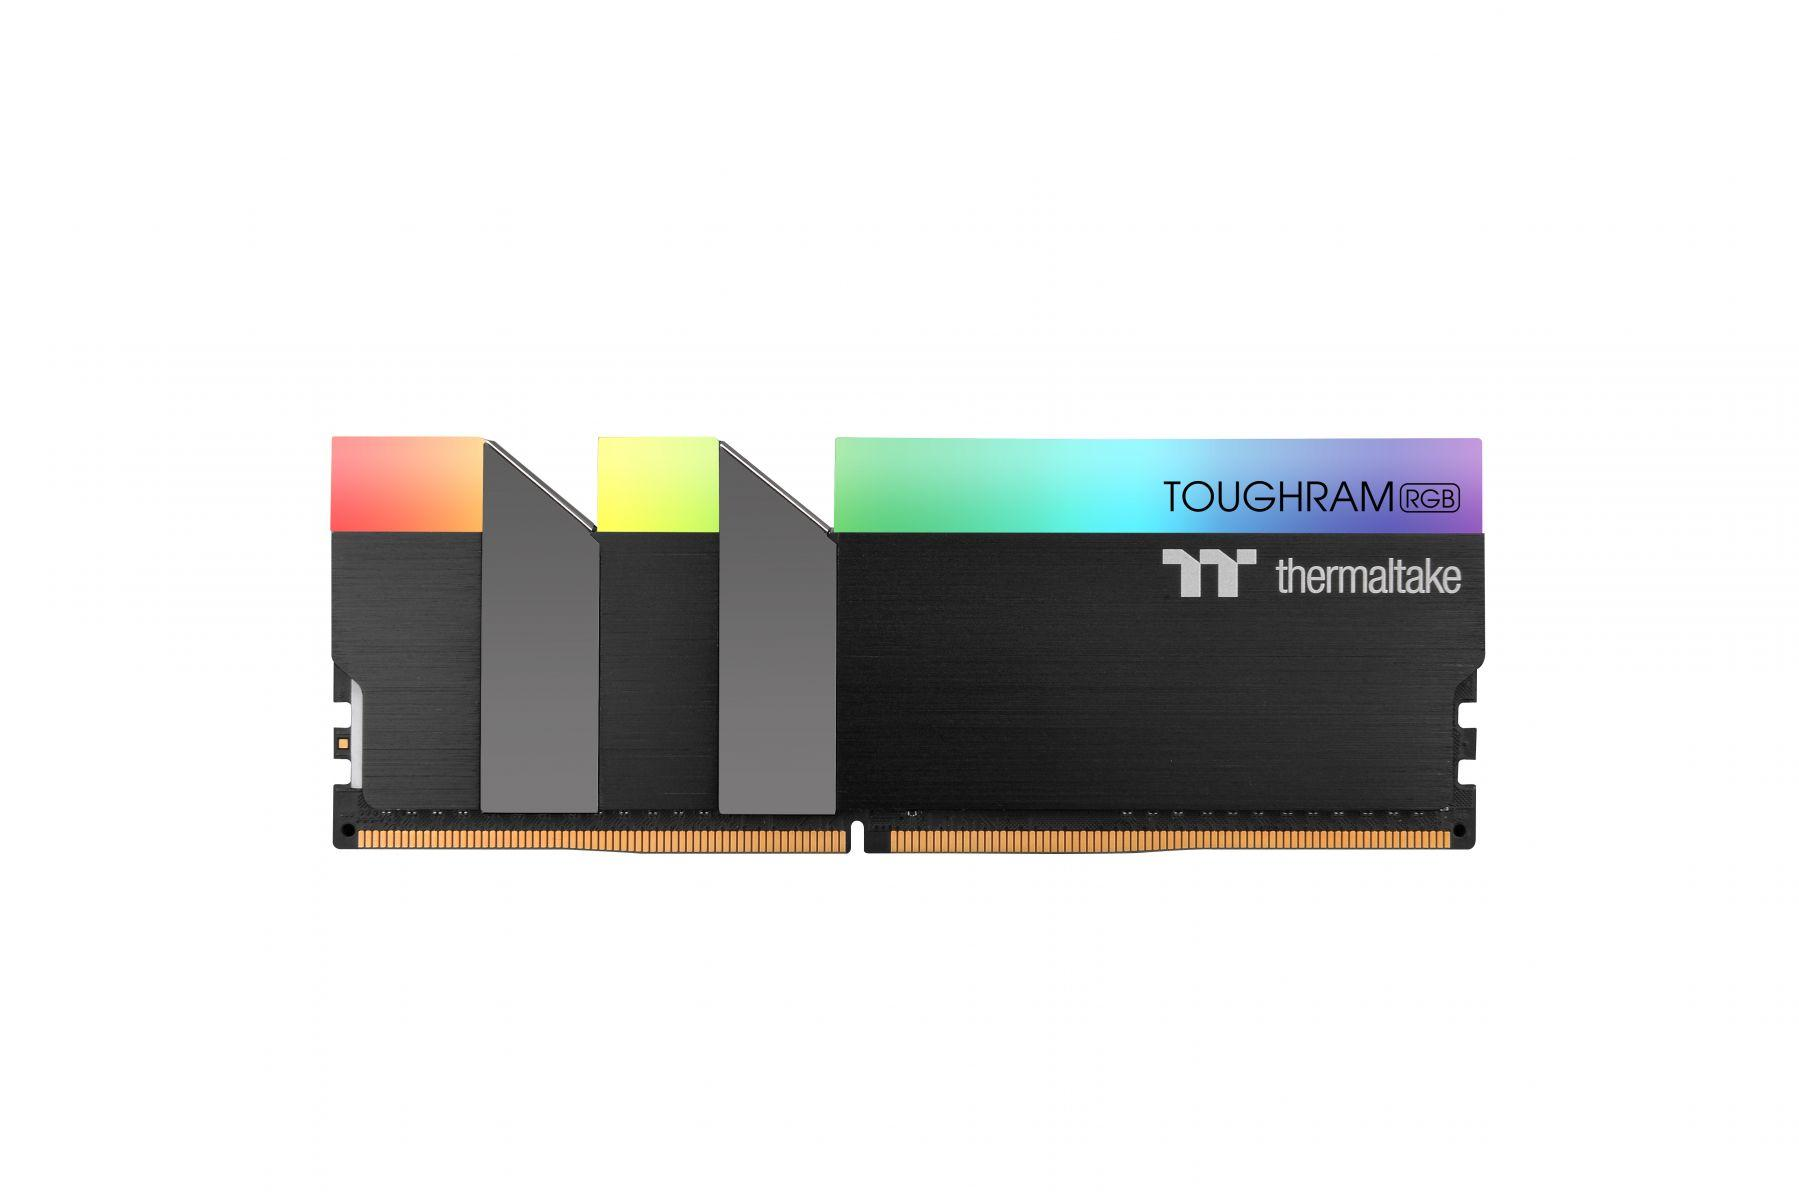 TOUGHRAM GB RGB 16 THERMALTAKE Arbeitsspeicher DDR4